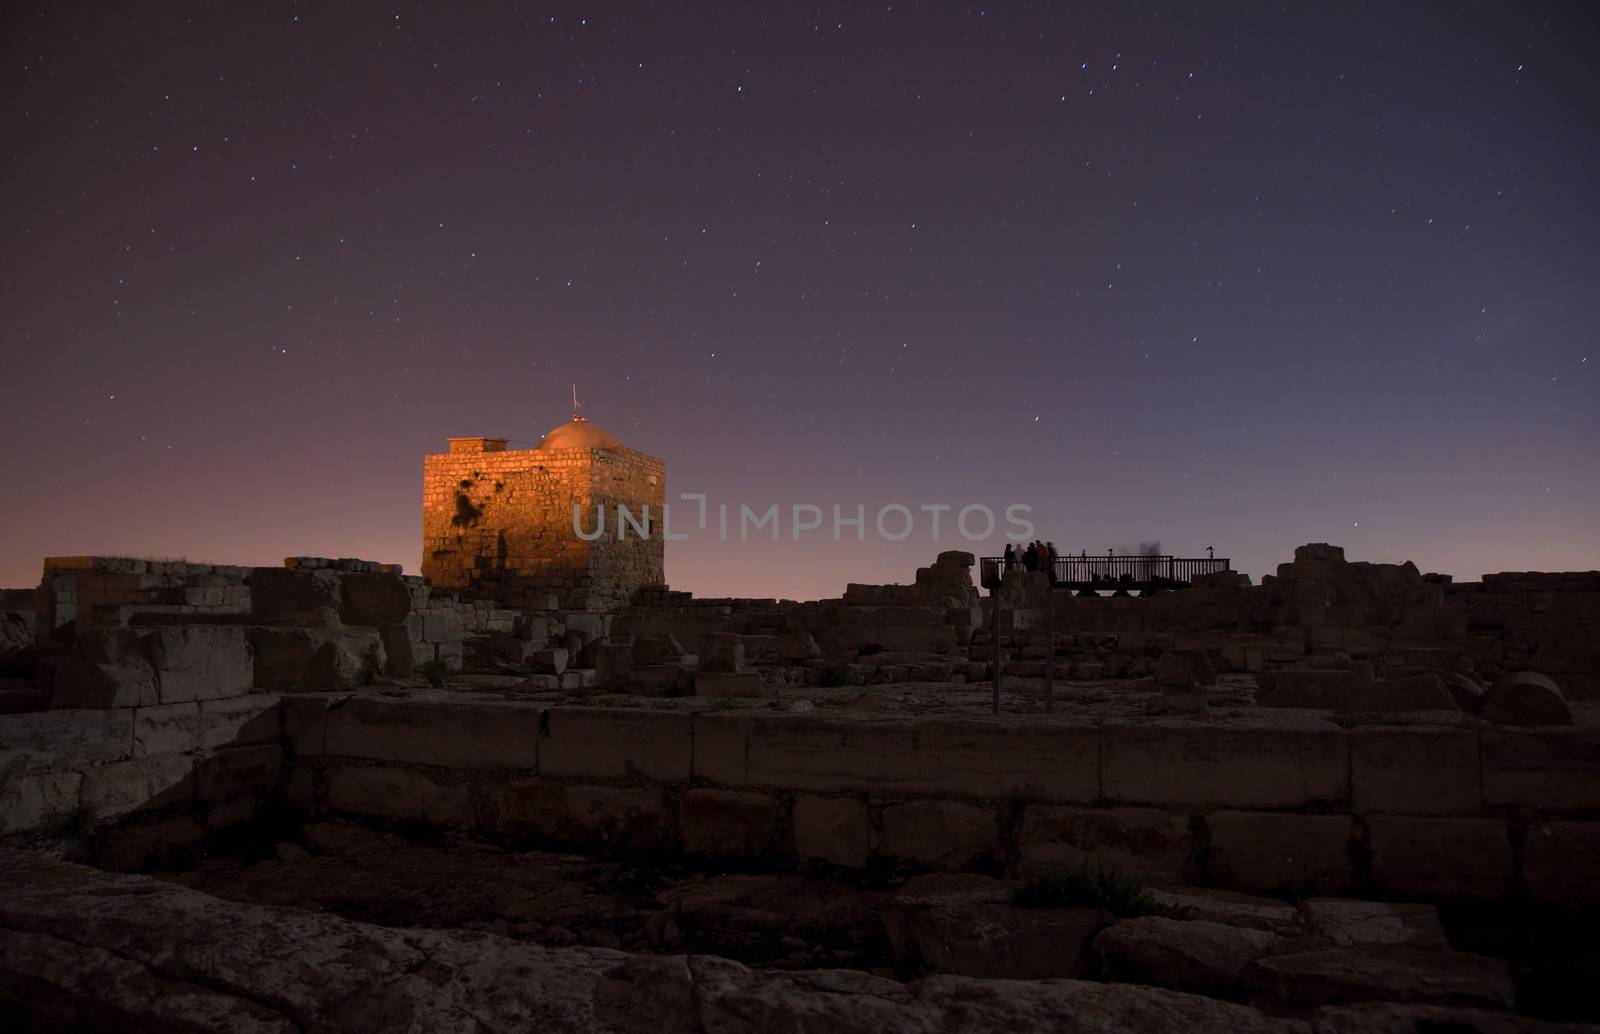 Ruins on holy mount Gerizim of Samaritans in Israel territory